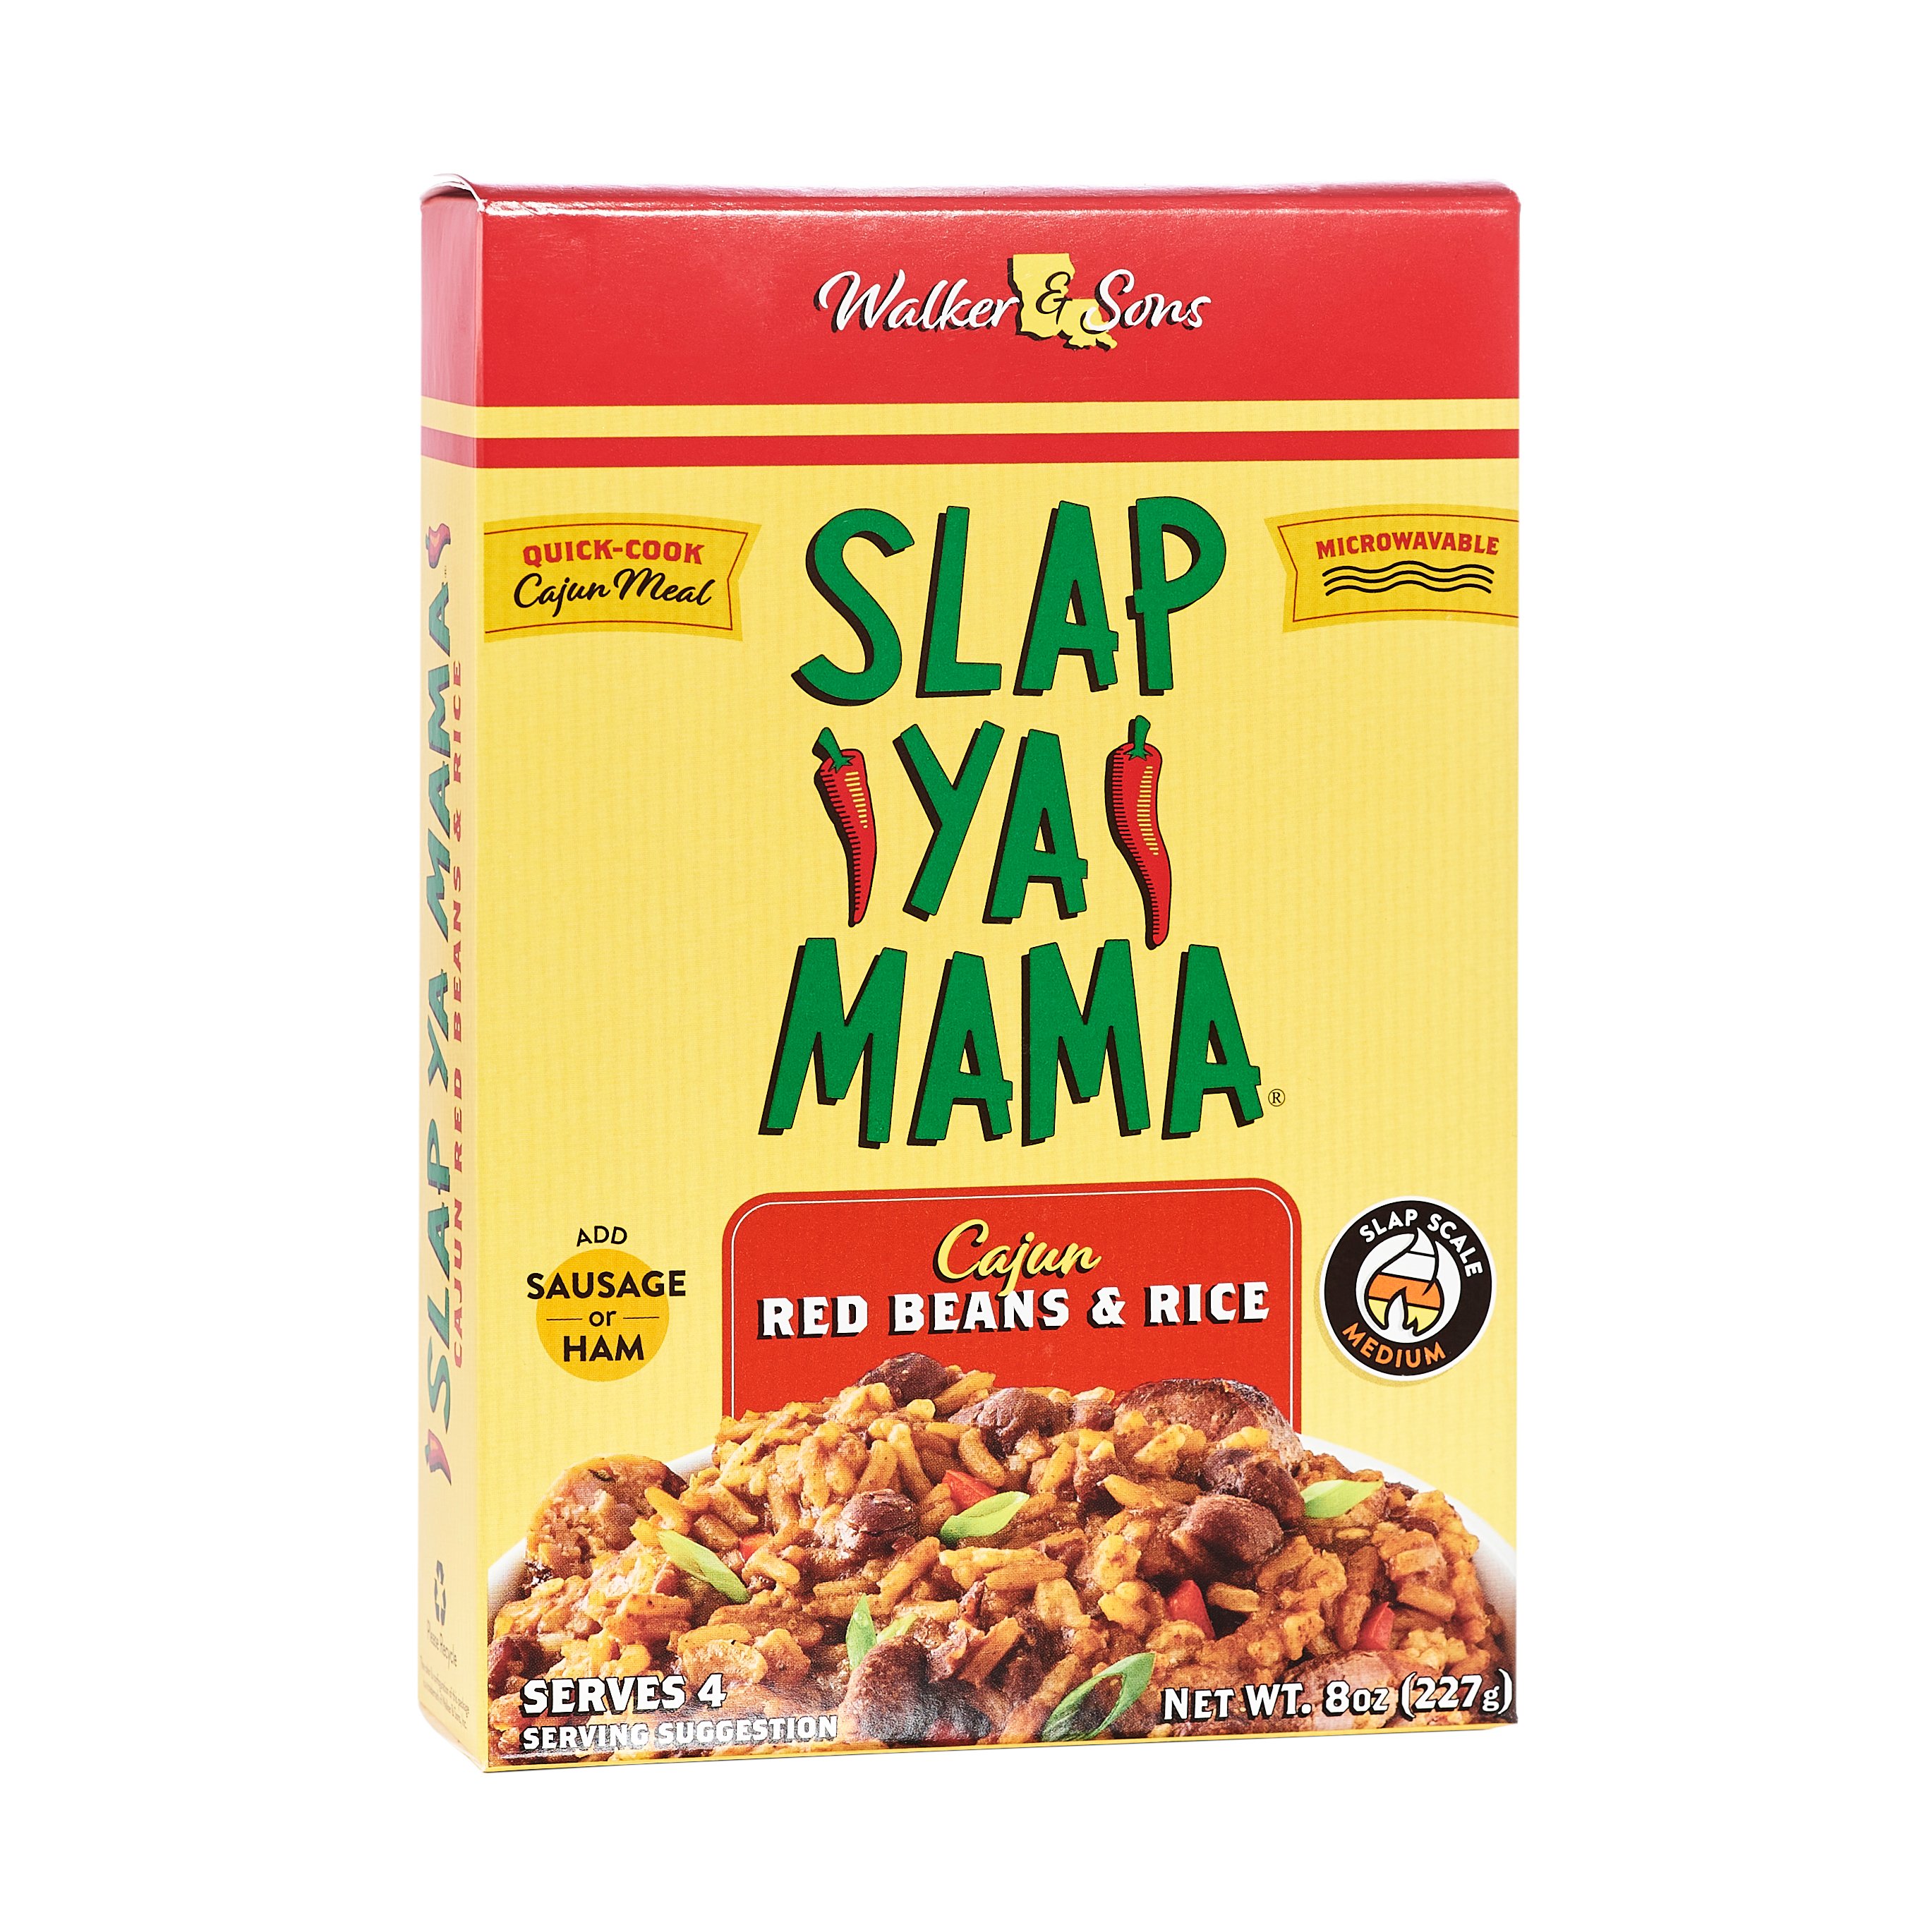 Slap Ya Mama All Natural Cajun Seasoning from Louisiana Spice Variety Pack,  8 Ounce Cans, 1 Cajun, 1 Cajun Hot, 1 White Pepper Blend